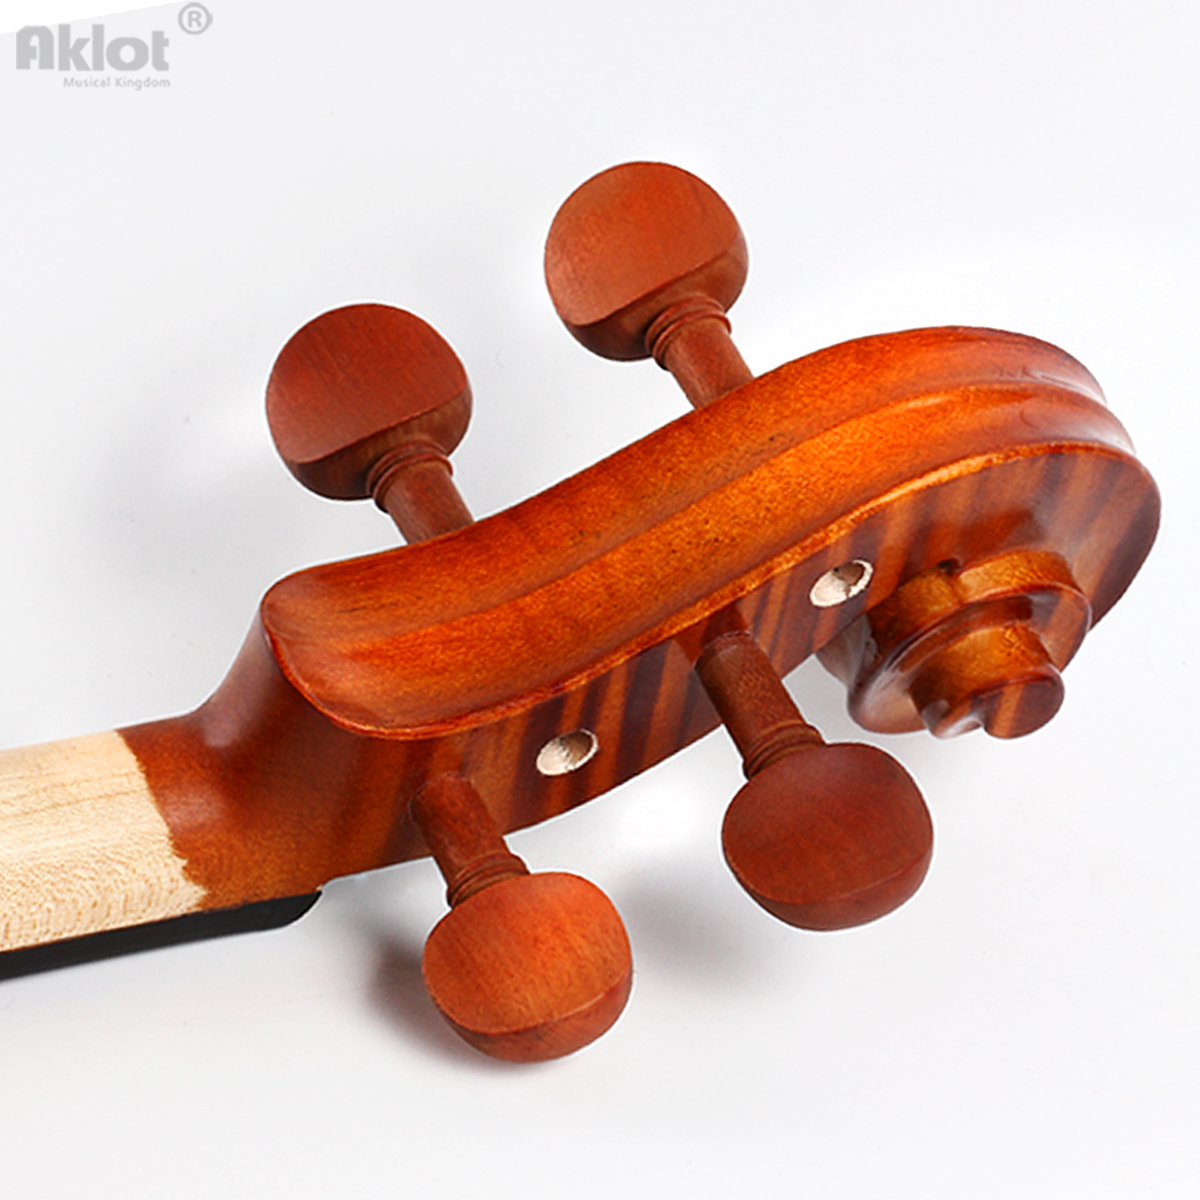 Aklot Violin 4/4 Full Size Fiddle Antique Natural Acoustic Solid 